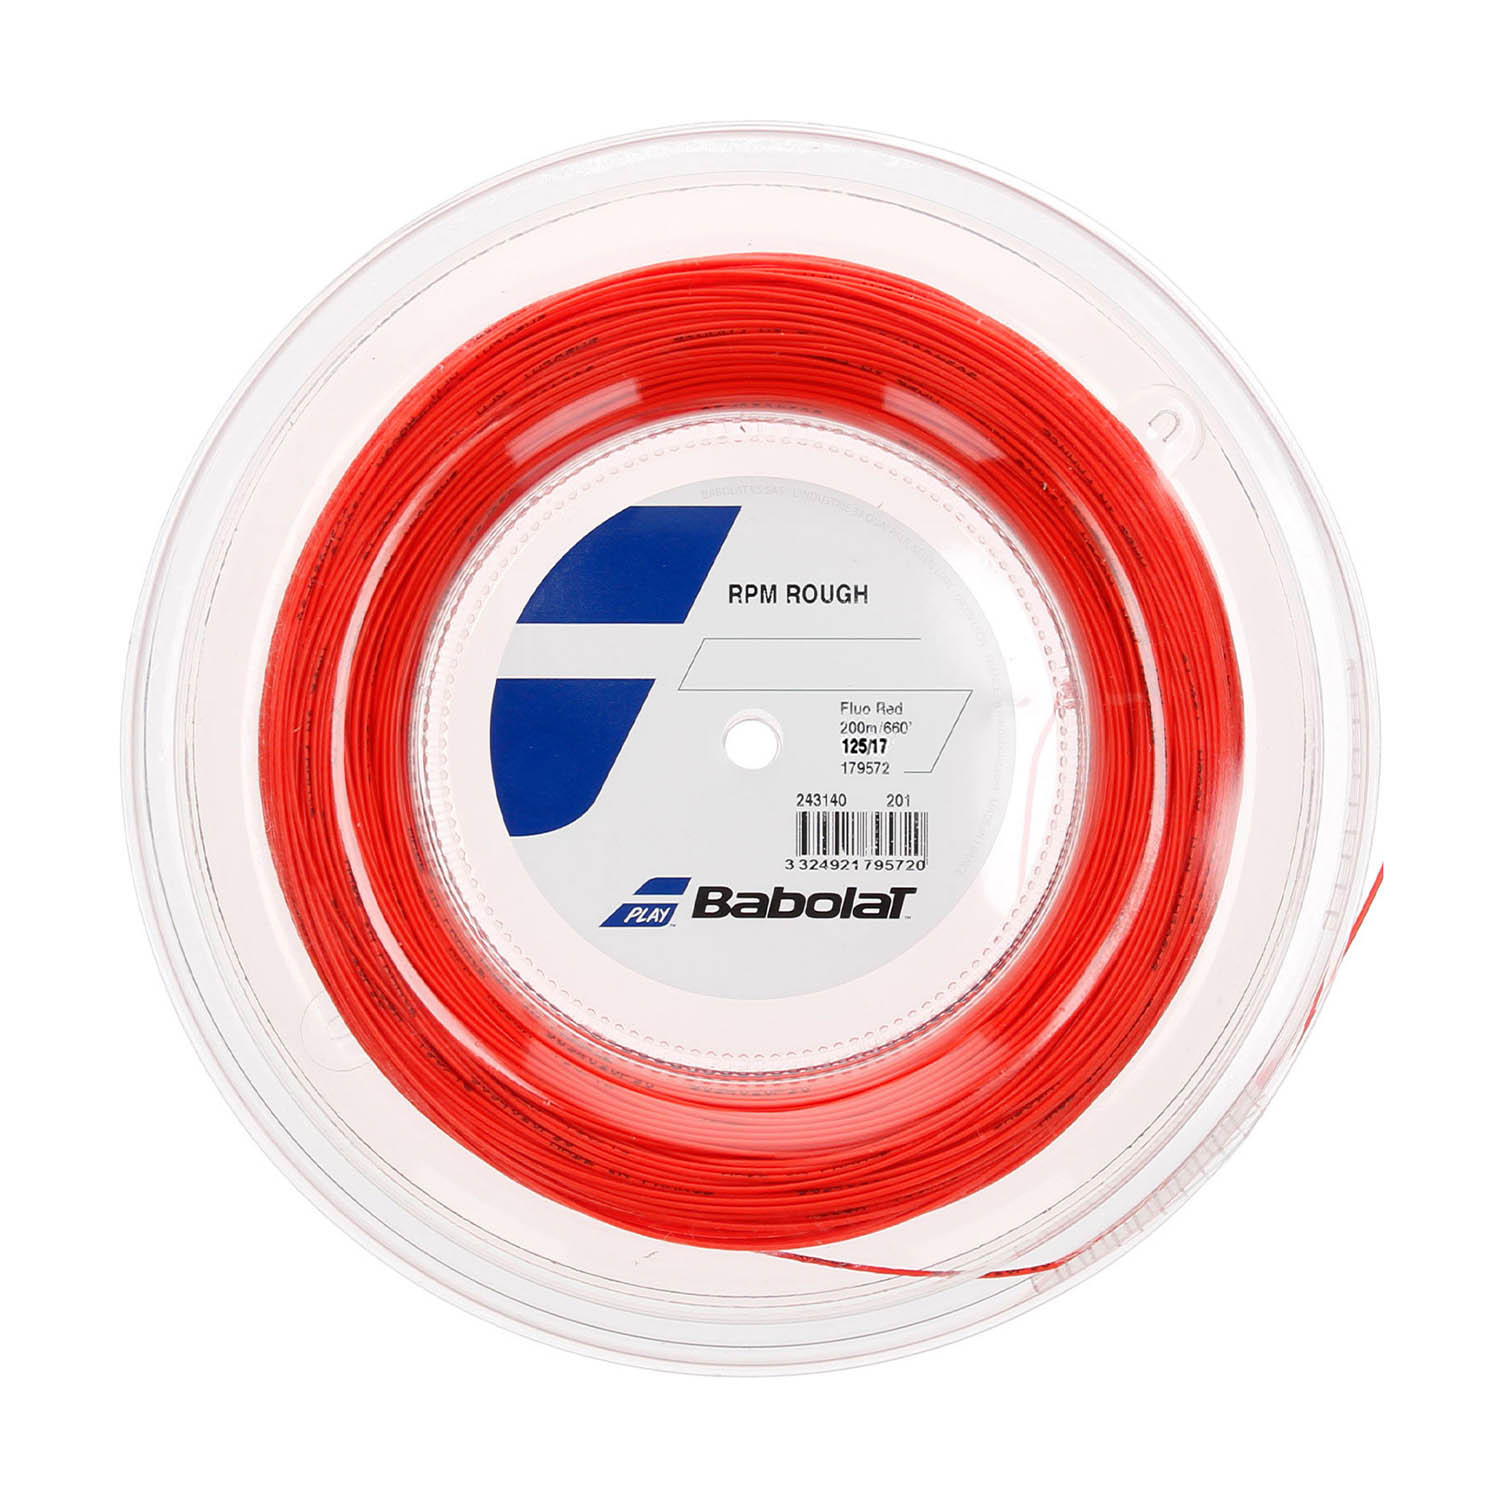 Babolat RPM Rough 1.25 Bobina 200 m - Red Fluo